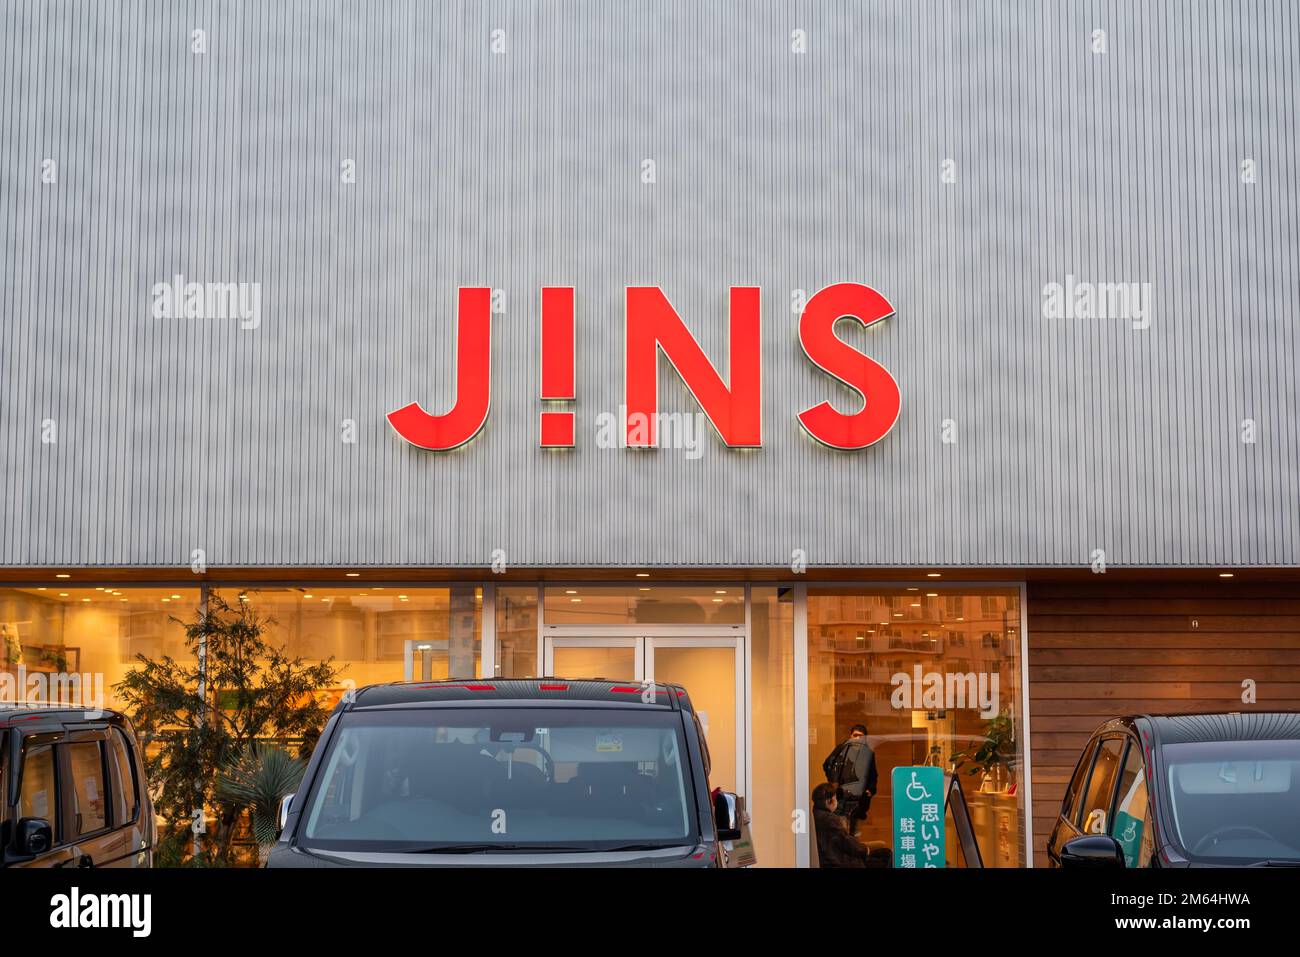 Jins optical eyeglasses store in Japan storefront Stock Photo